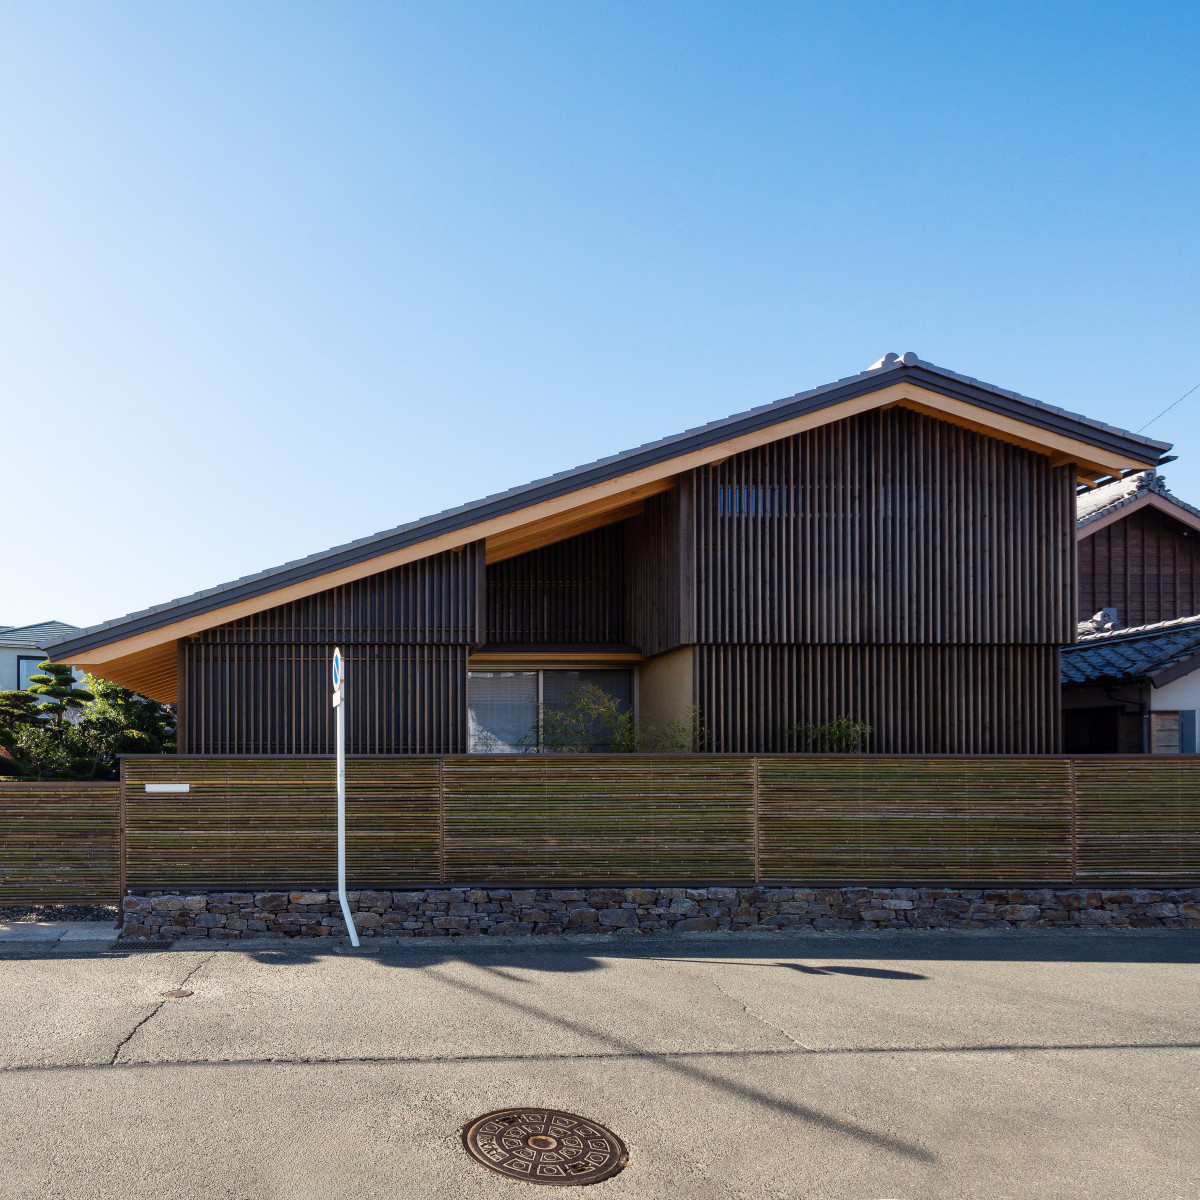 Fuwaku Residential by Shigetaka Mochizuki Bronze Architecture, Building and Structure Design Award Winner 2024 